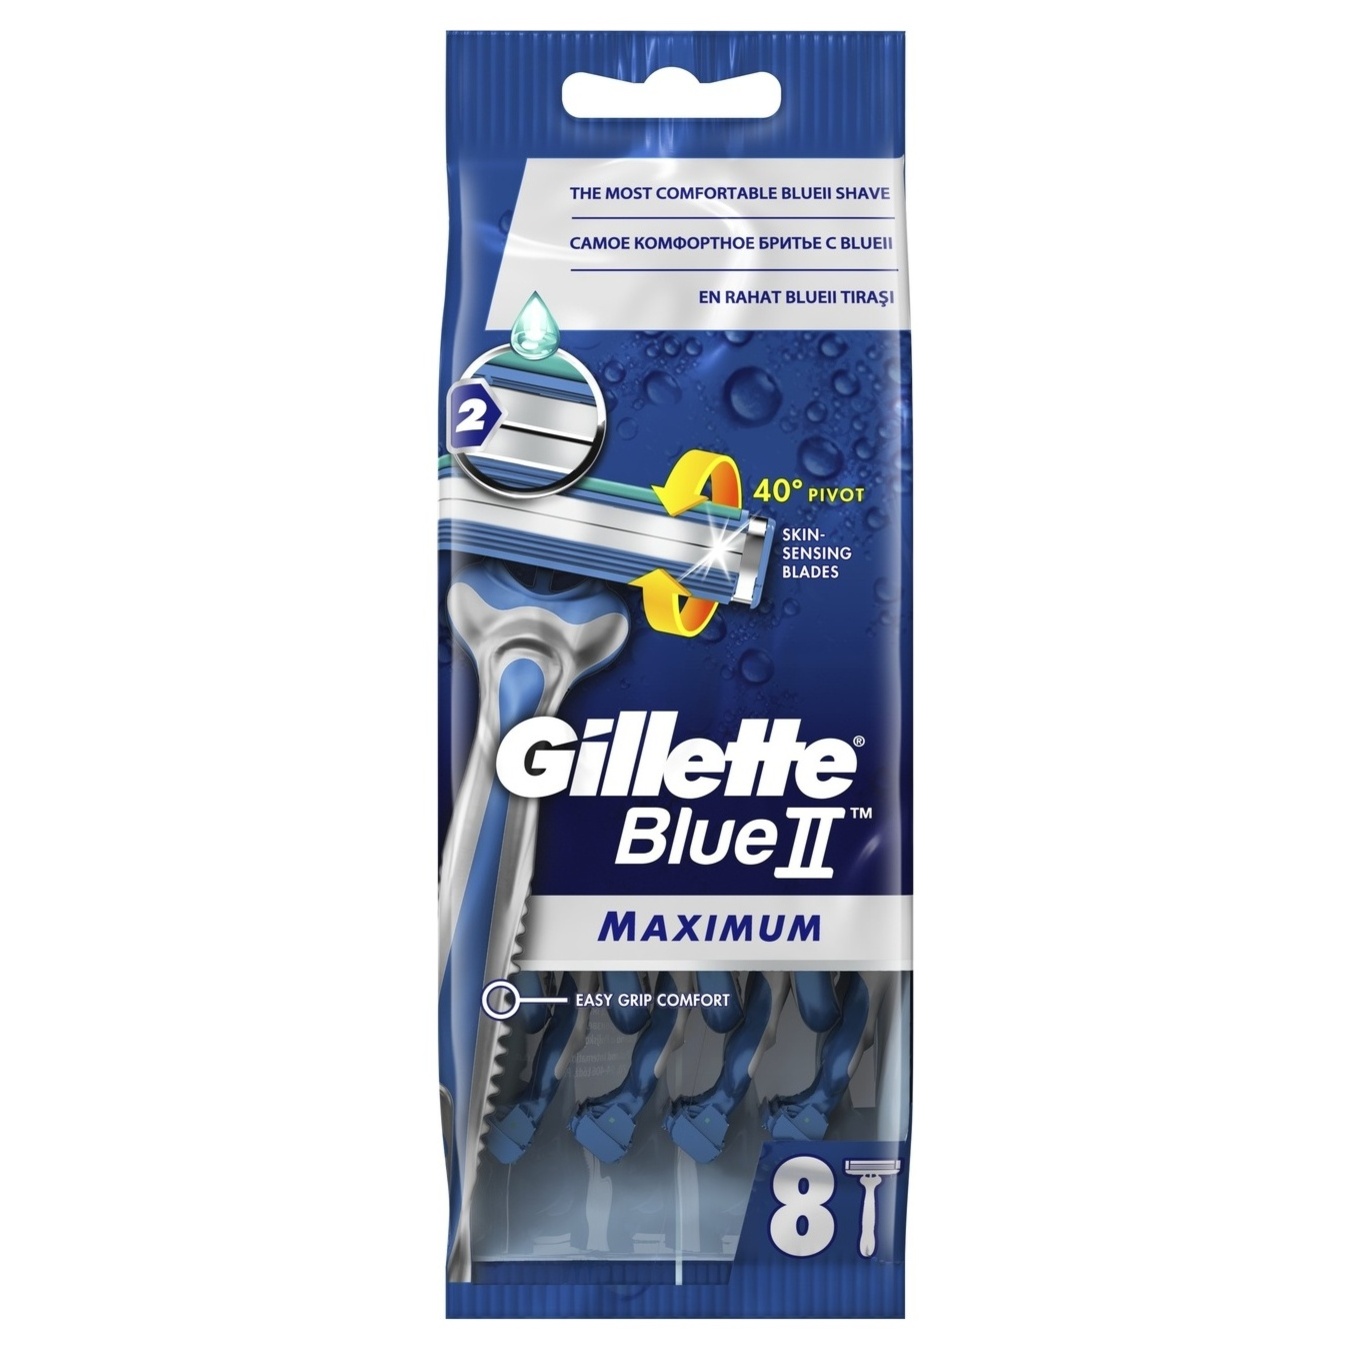 Gillette disposable razors Blueii Max 6 pcs + 2 pcs for free